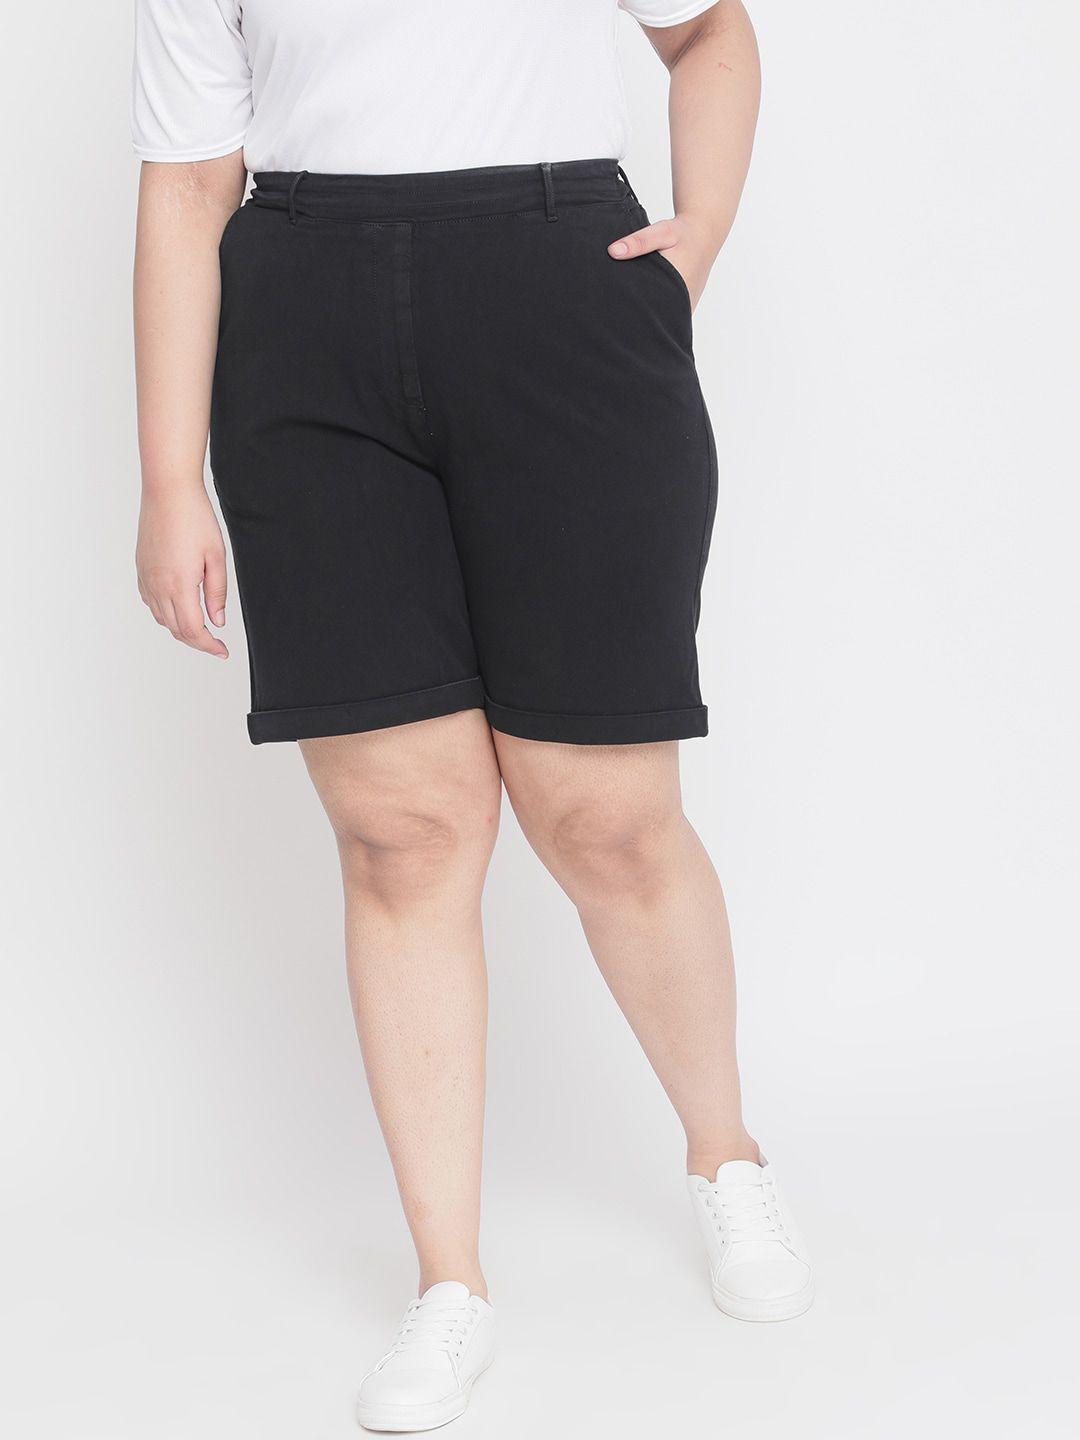 amydus women plus size black solid regular fit regular shorts